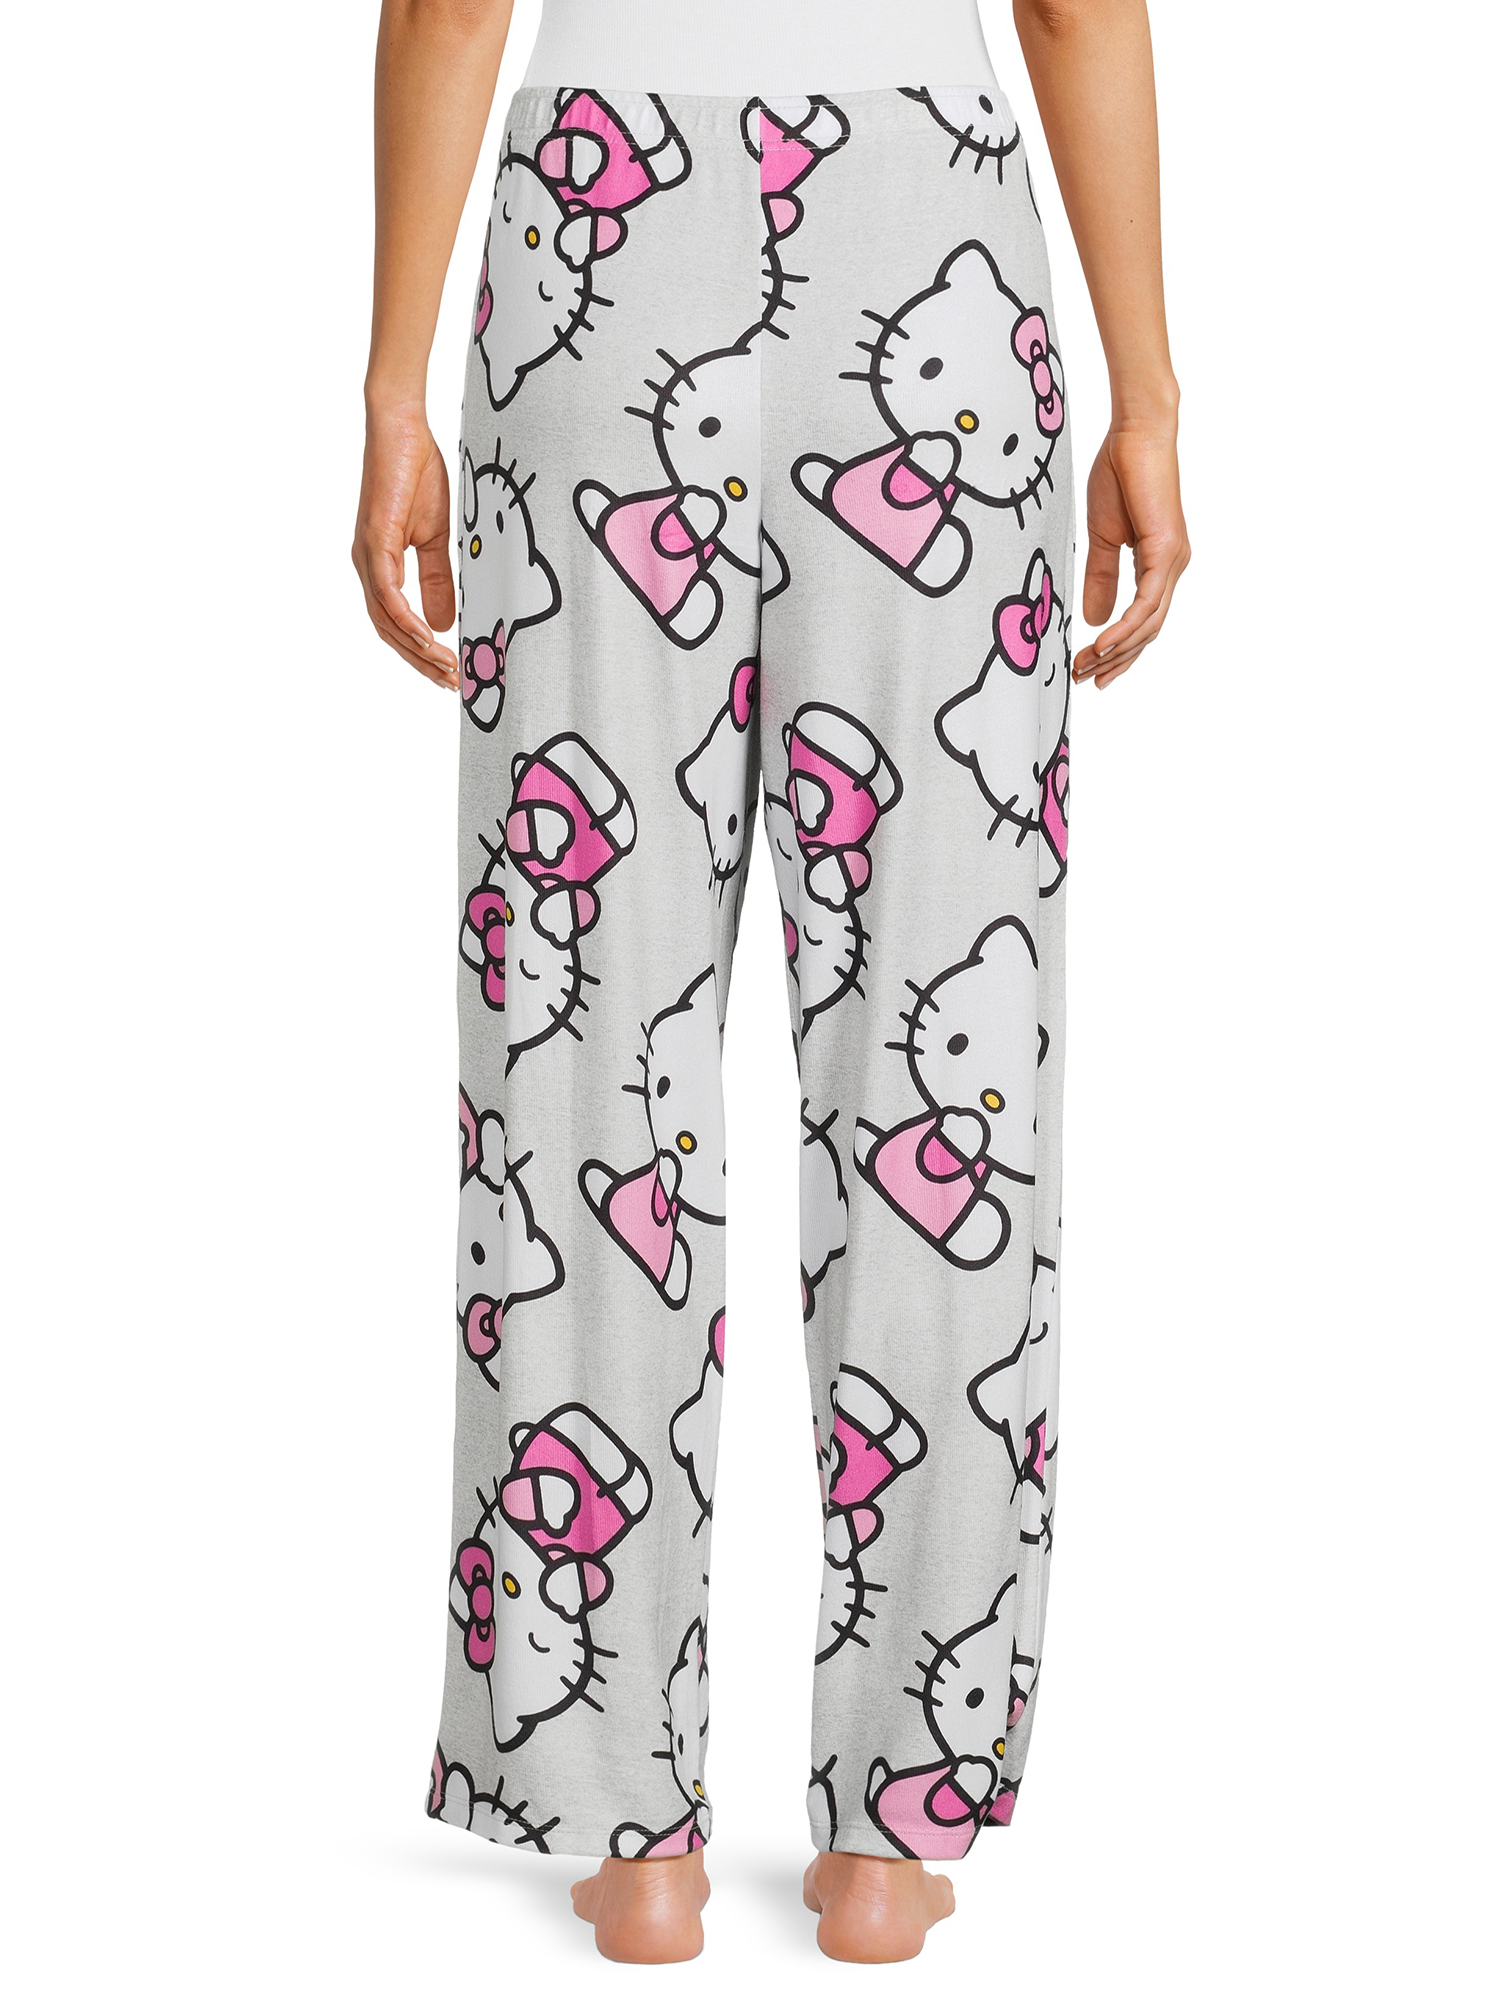 Hello Kitty Print Lounge Pants, Size XS-3X - image 3 of 5